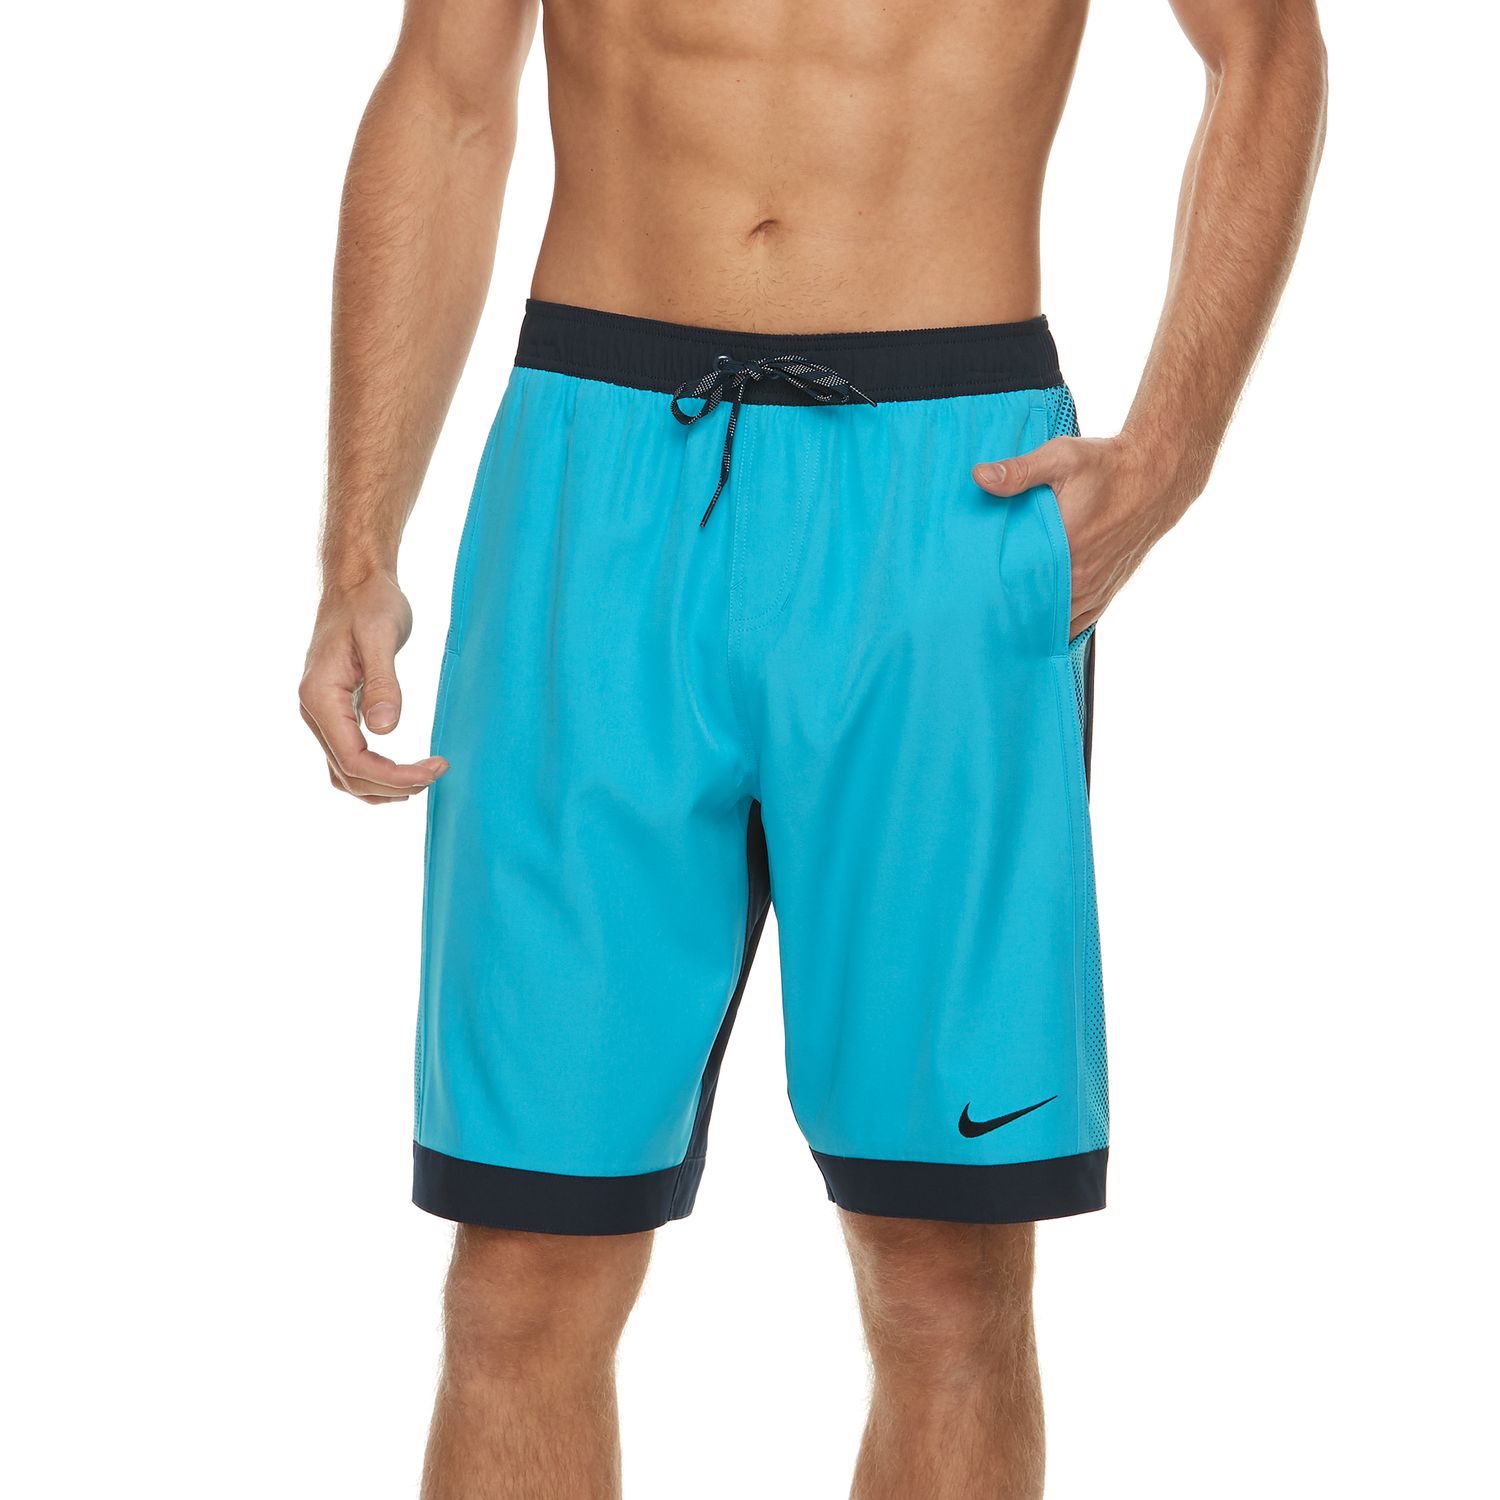 Men's Nike Volley Swim Trunks